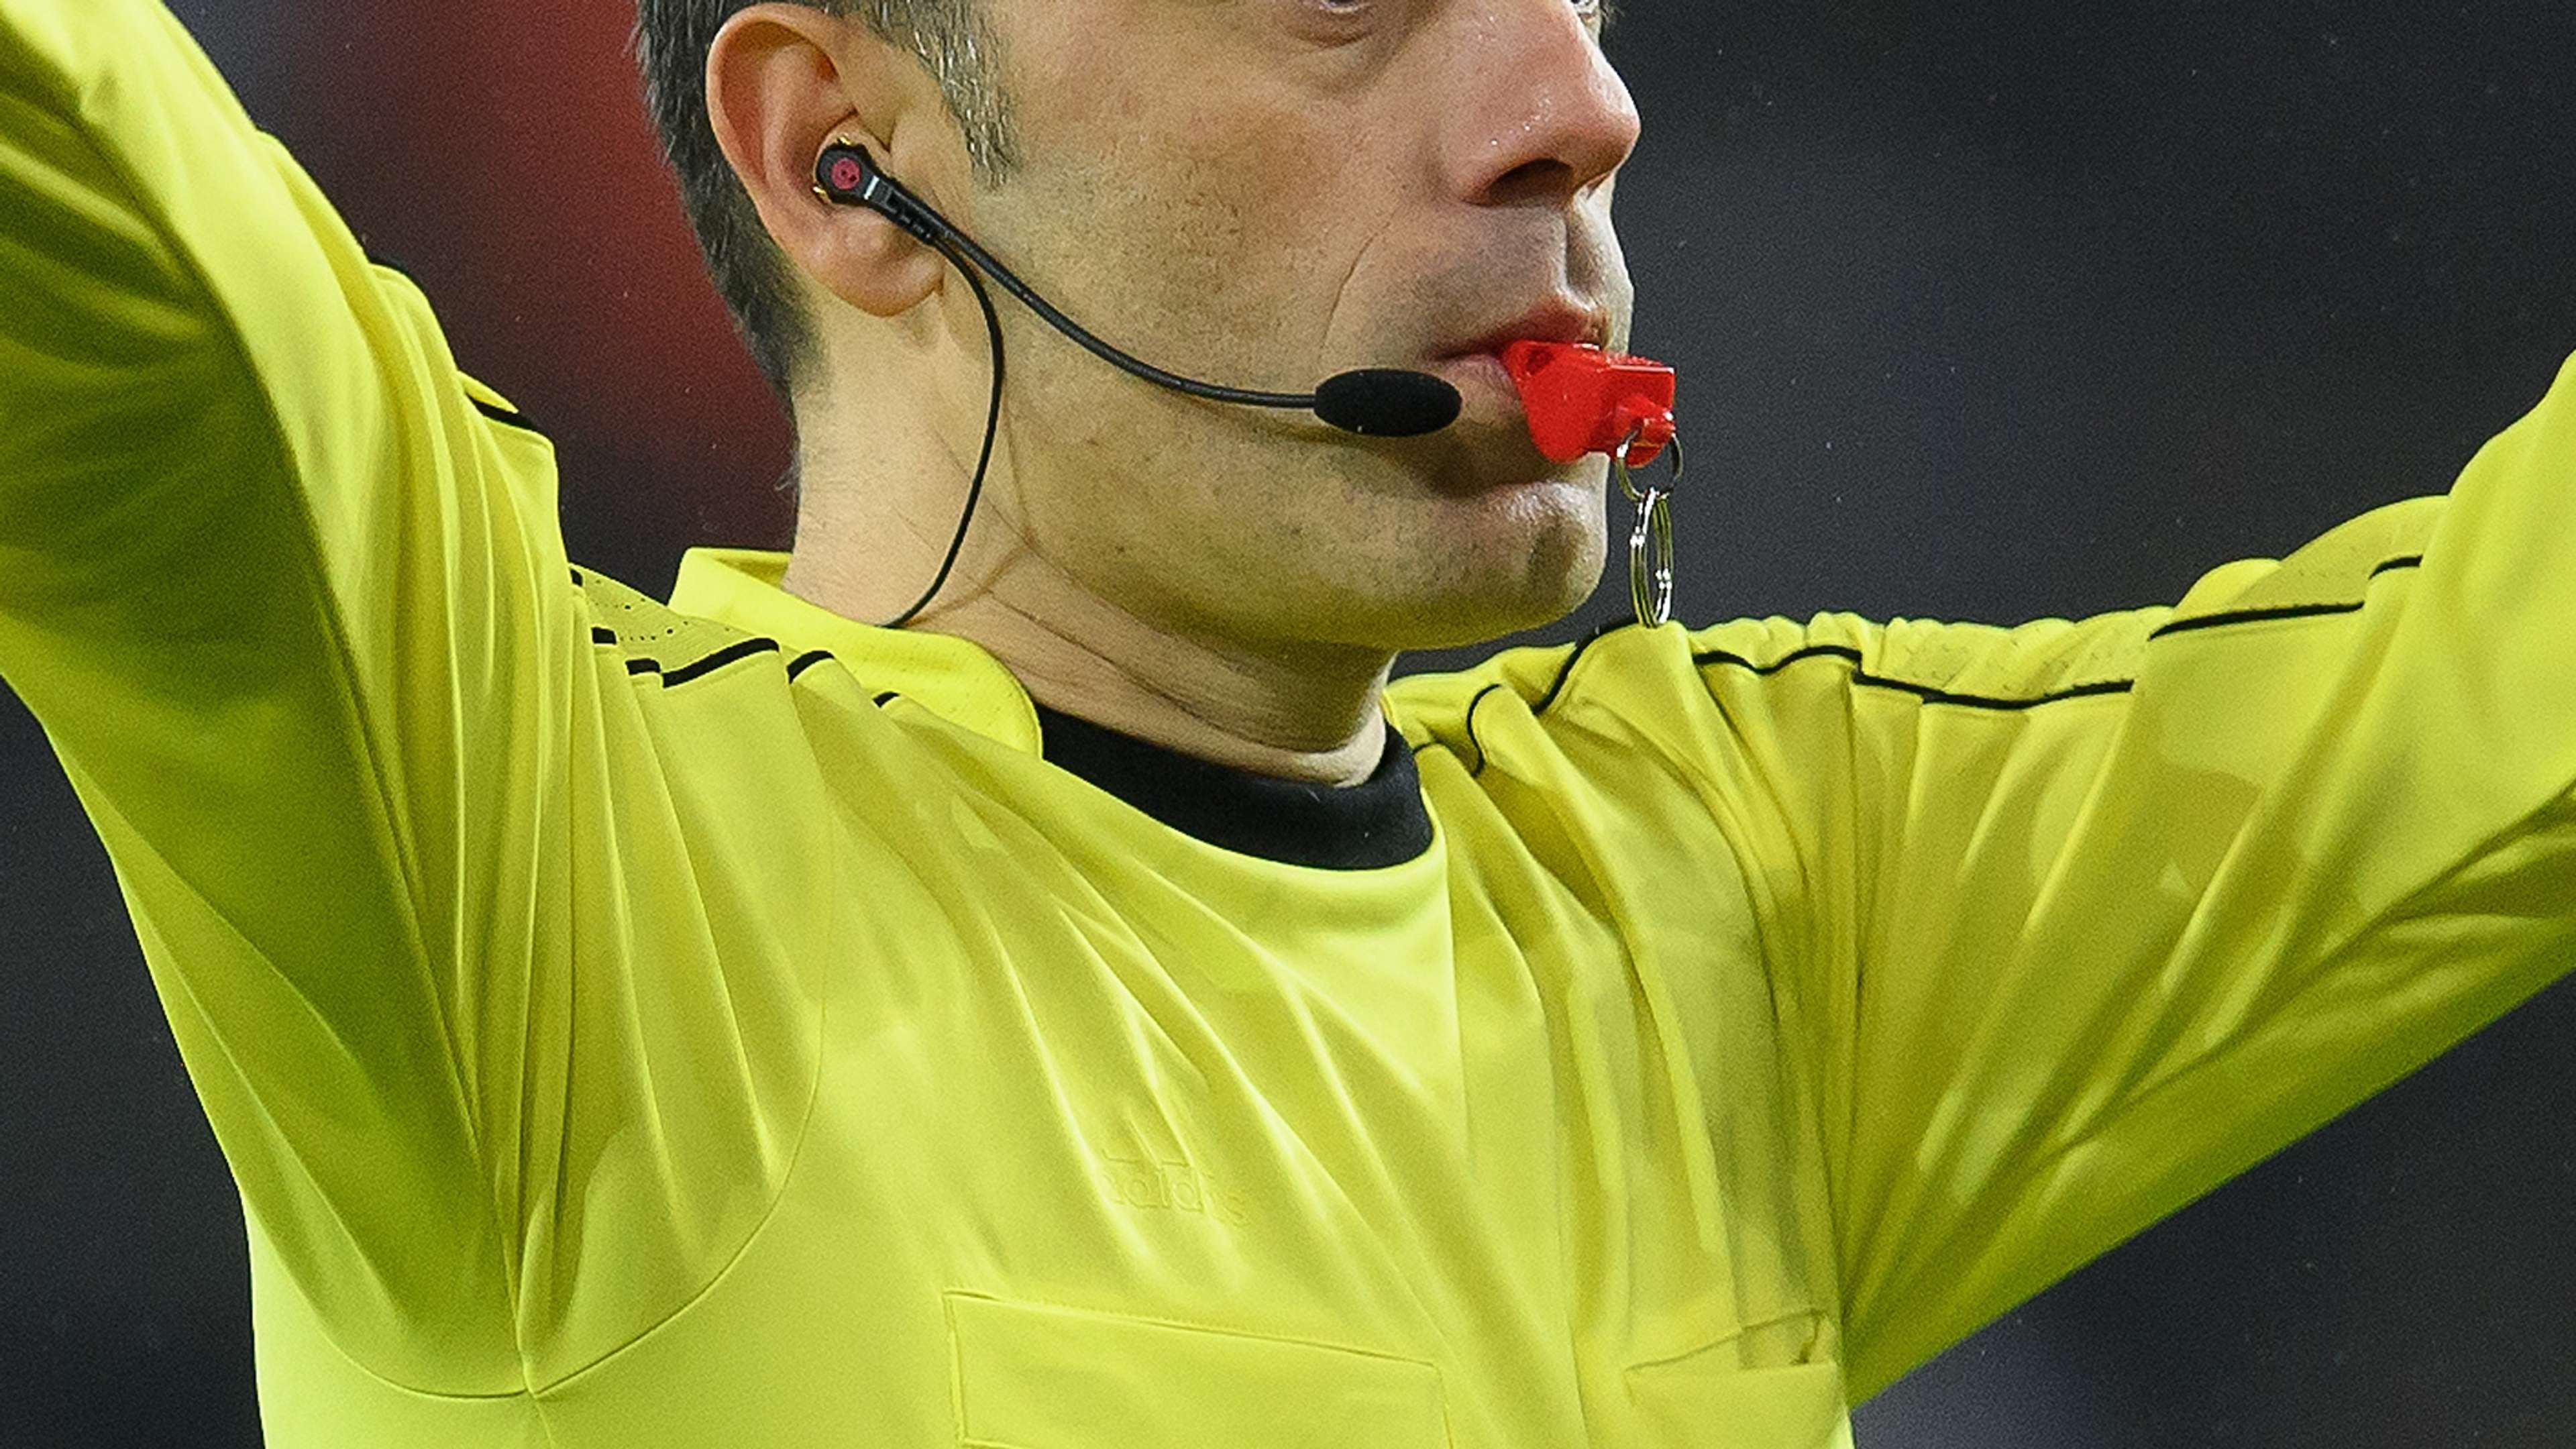 Referee blows